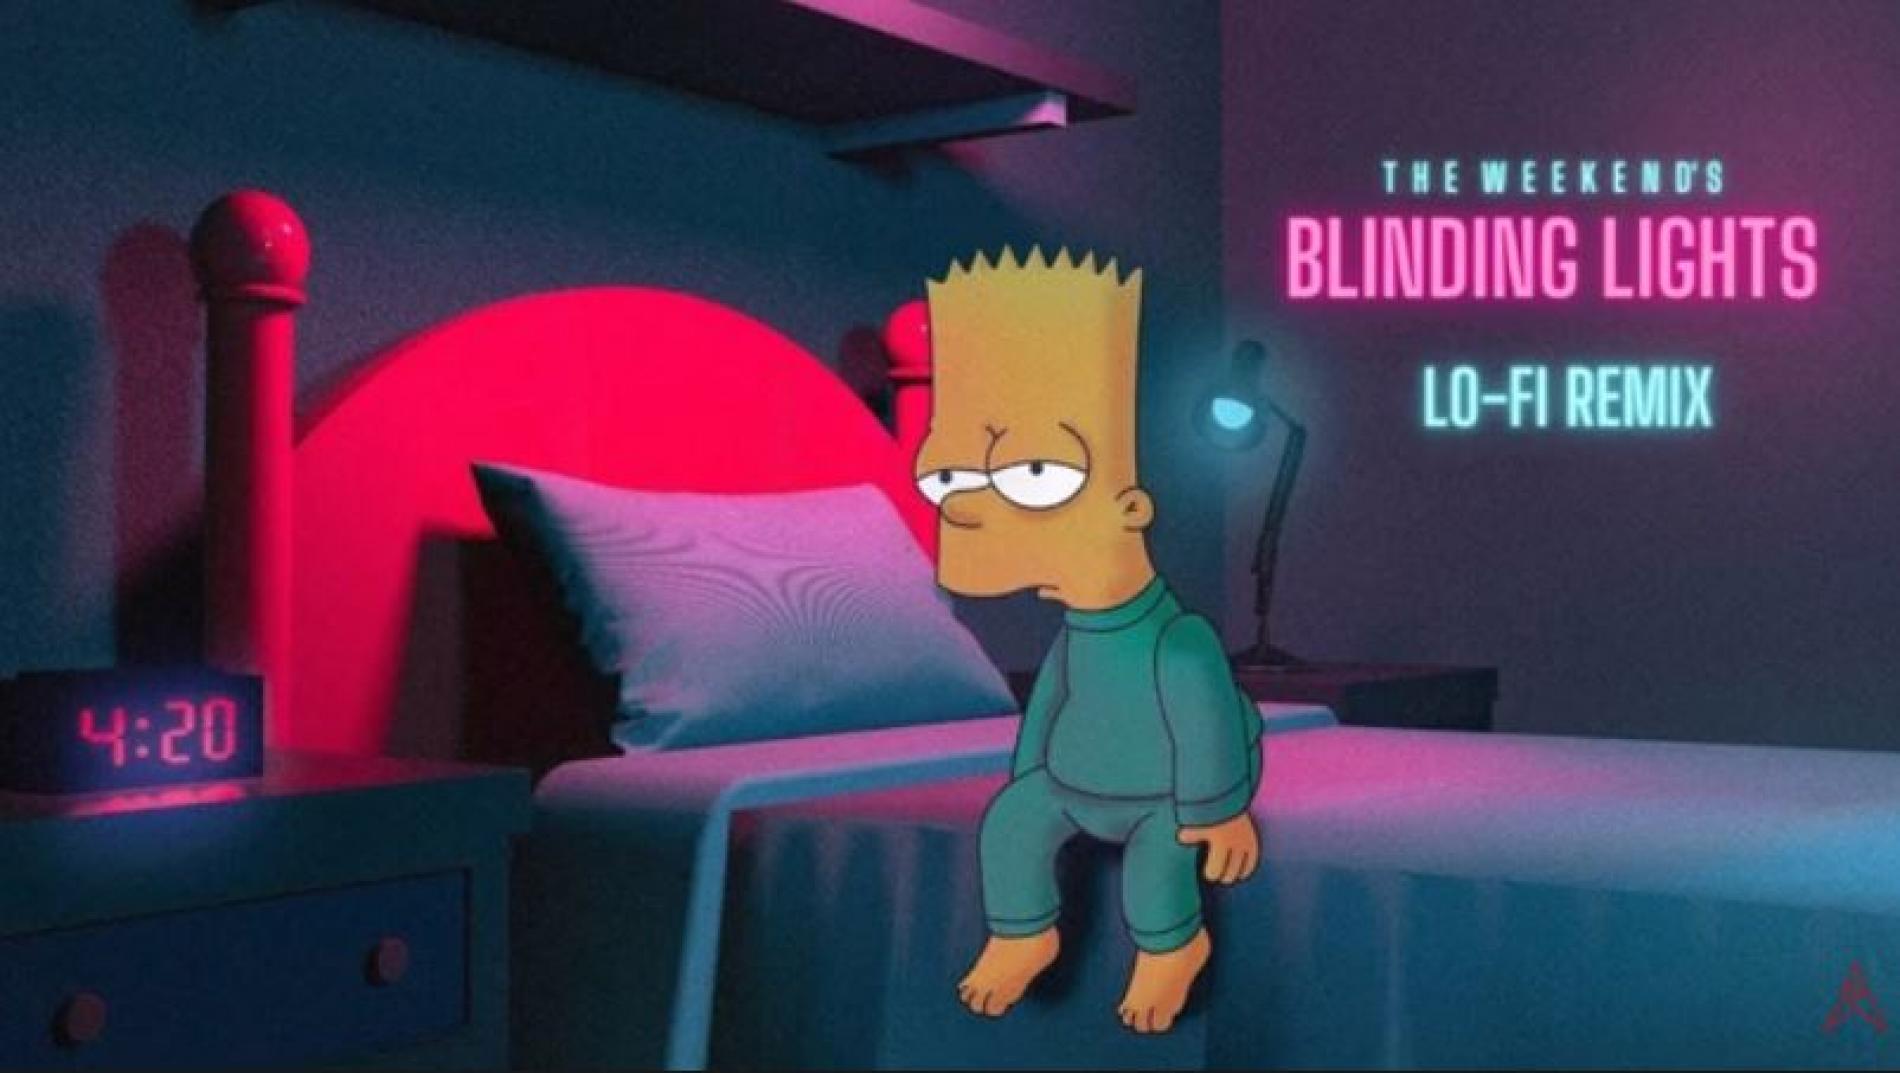 New Music : The Weekend – Blinding Lights | Lo-Fi Remix (Andun)